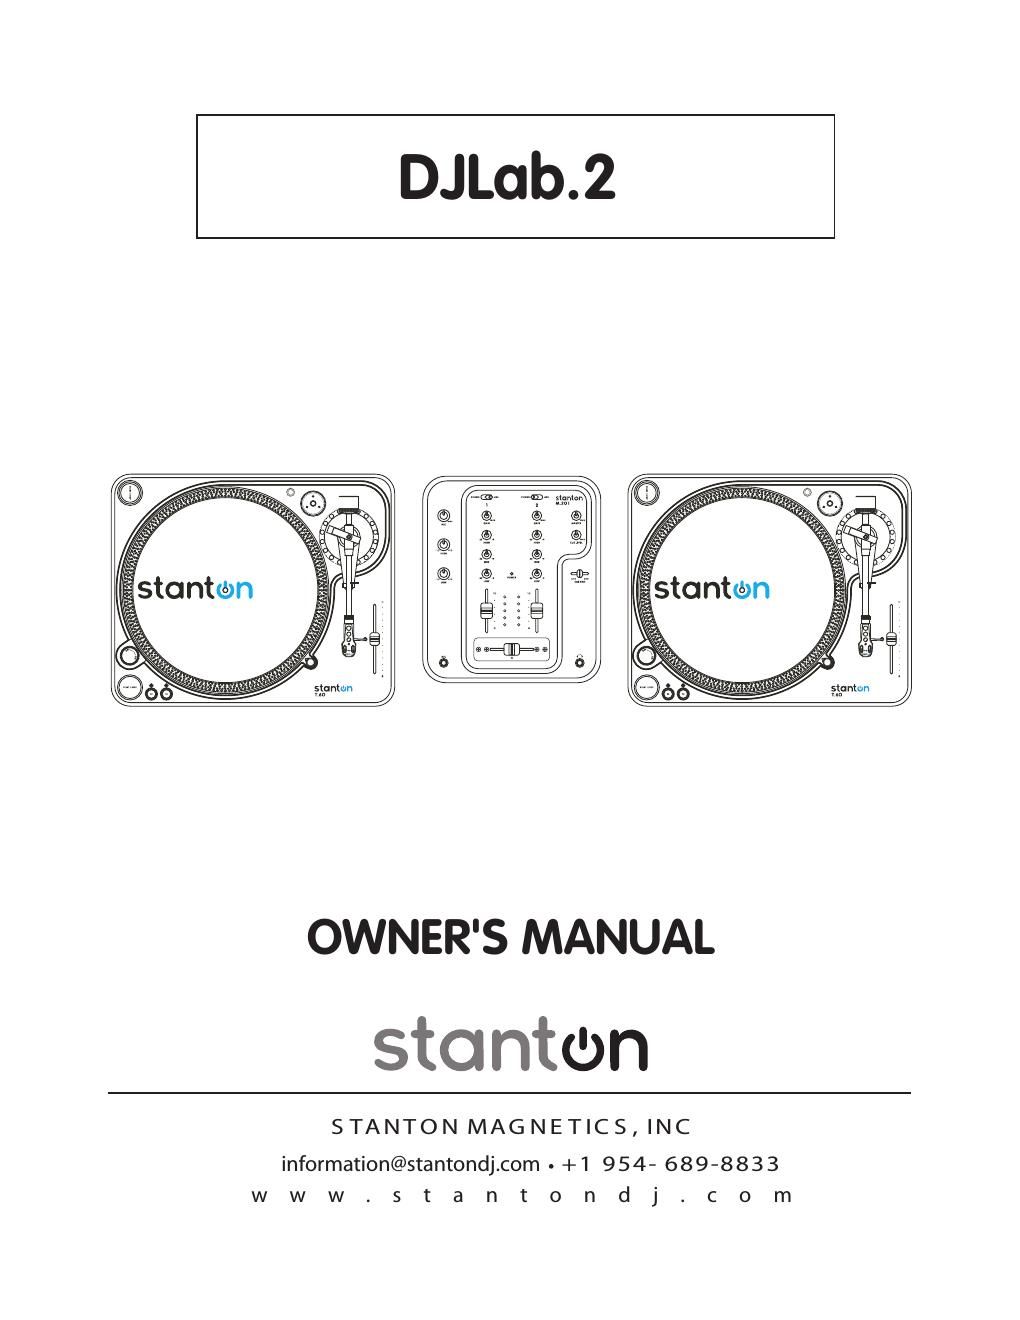 stanton djlab 2 owners manual